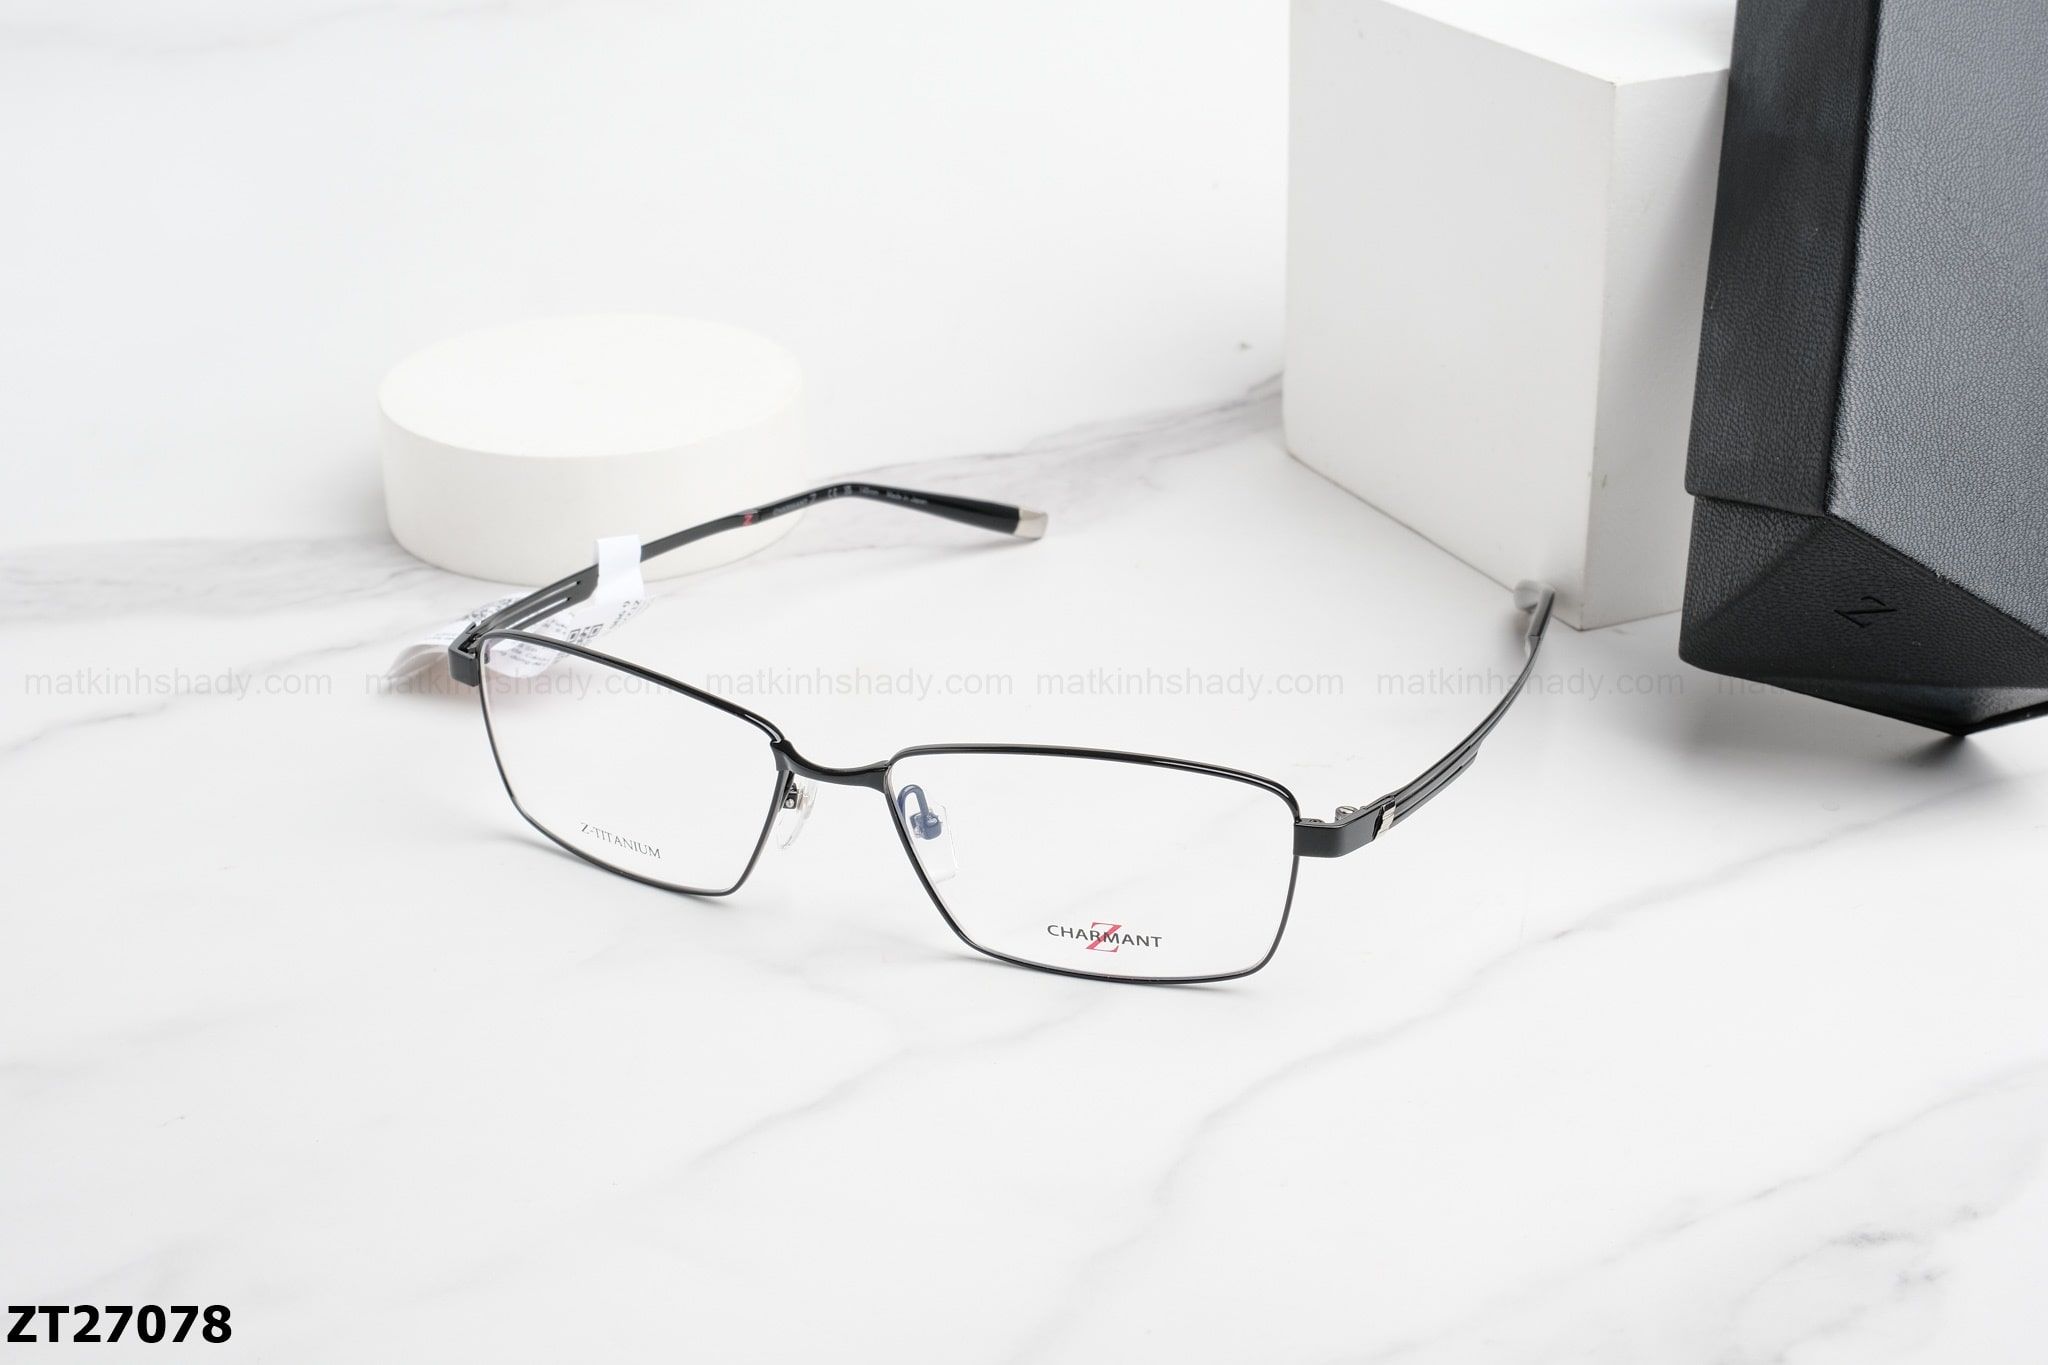  Charmant Z Eyewear - Glasses - ZT27078 